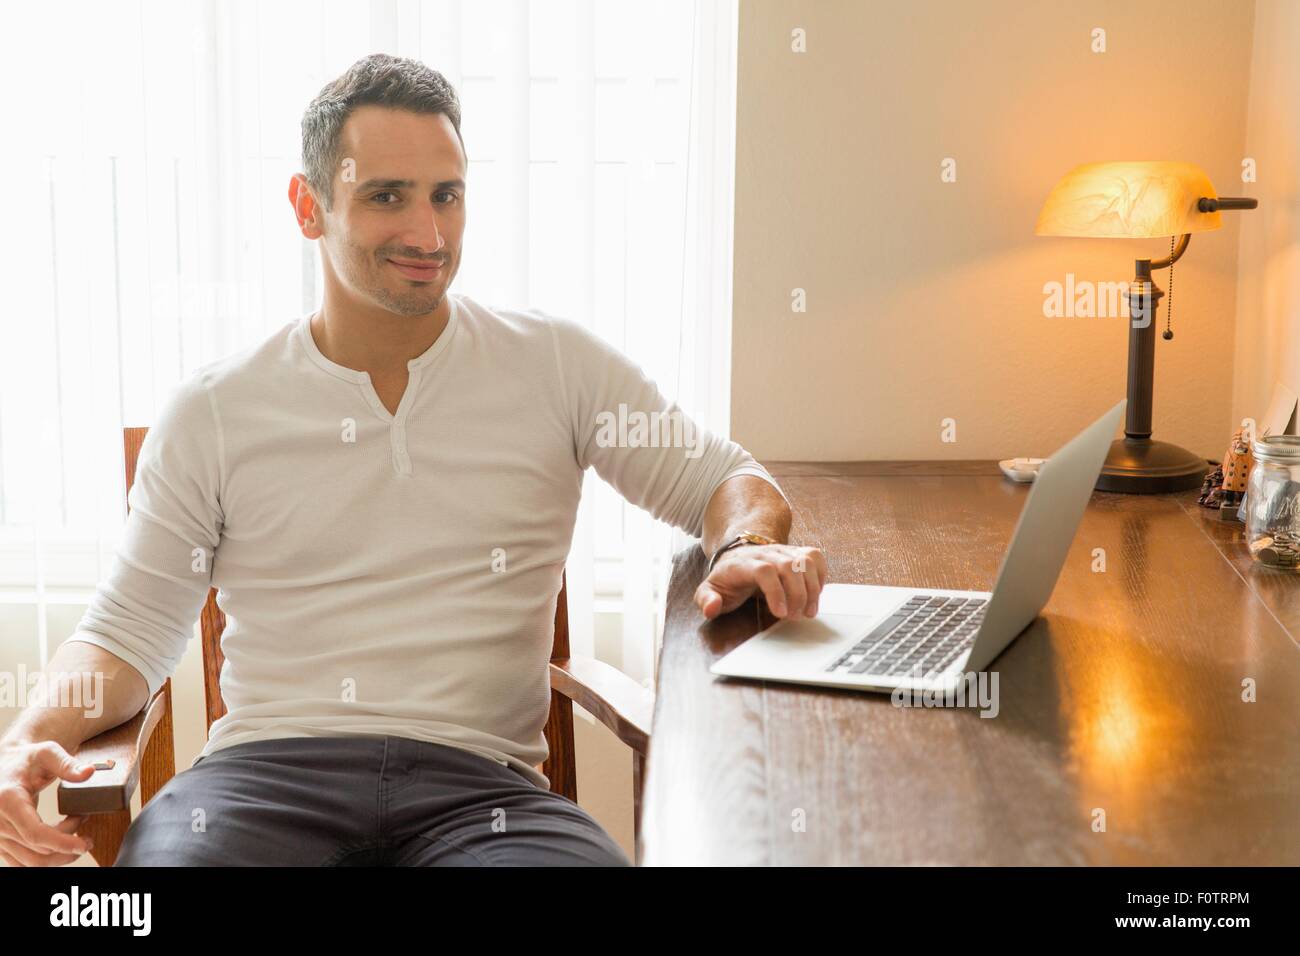 Mid adult man sitting at desk, using laptop Stock Photo